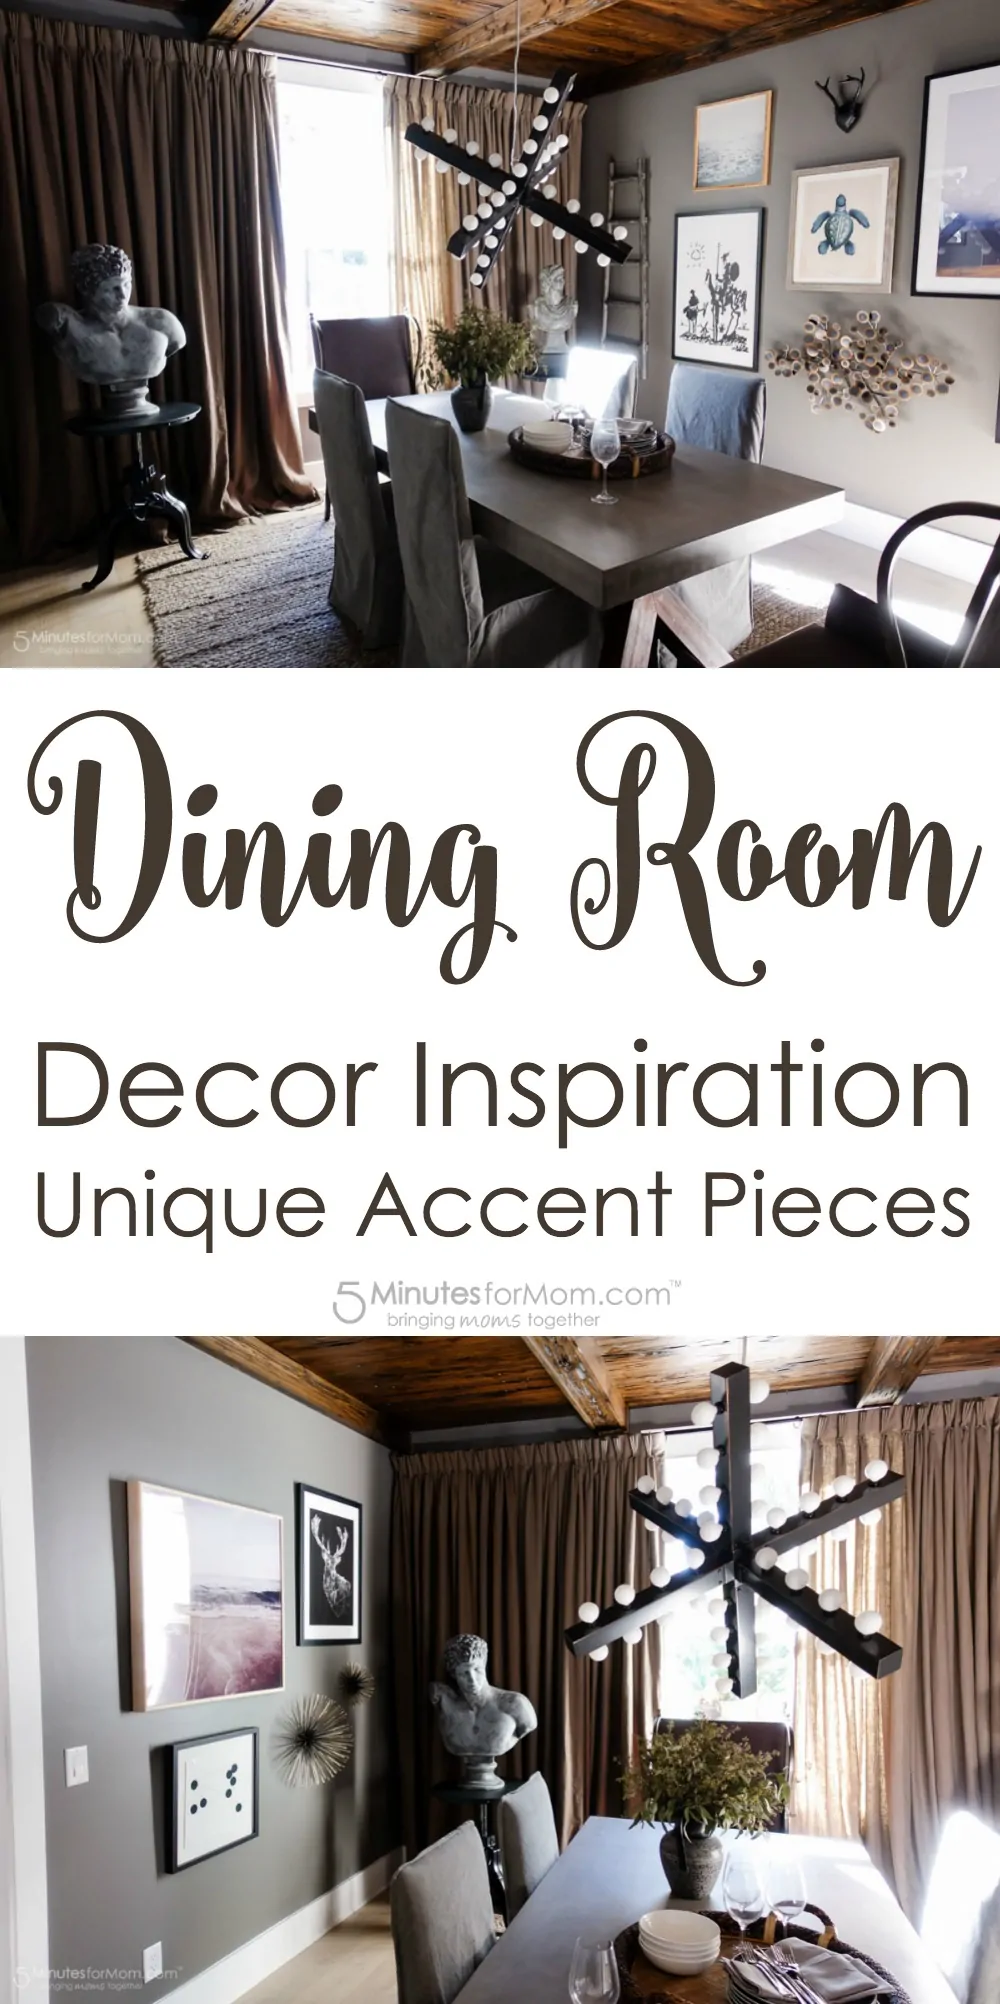 Dining Room Decor Inspiration - Unique Accent Pieces